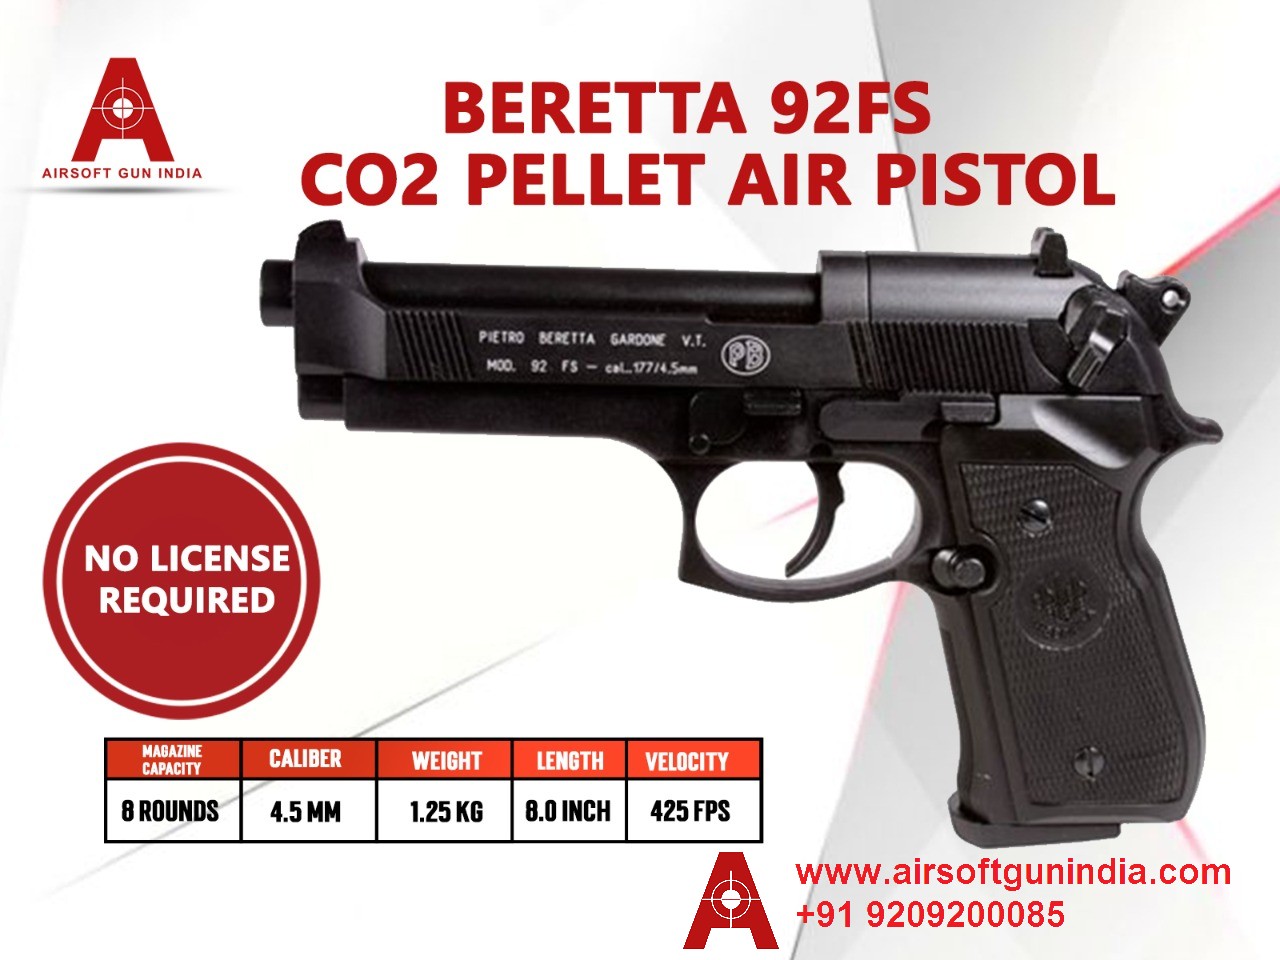 Beretta 92FS 4.5mm, .177 Cal. CO2 Pellet Air Pistol In India By Airsoft Gun India